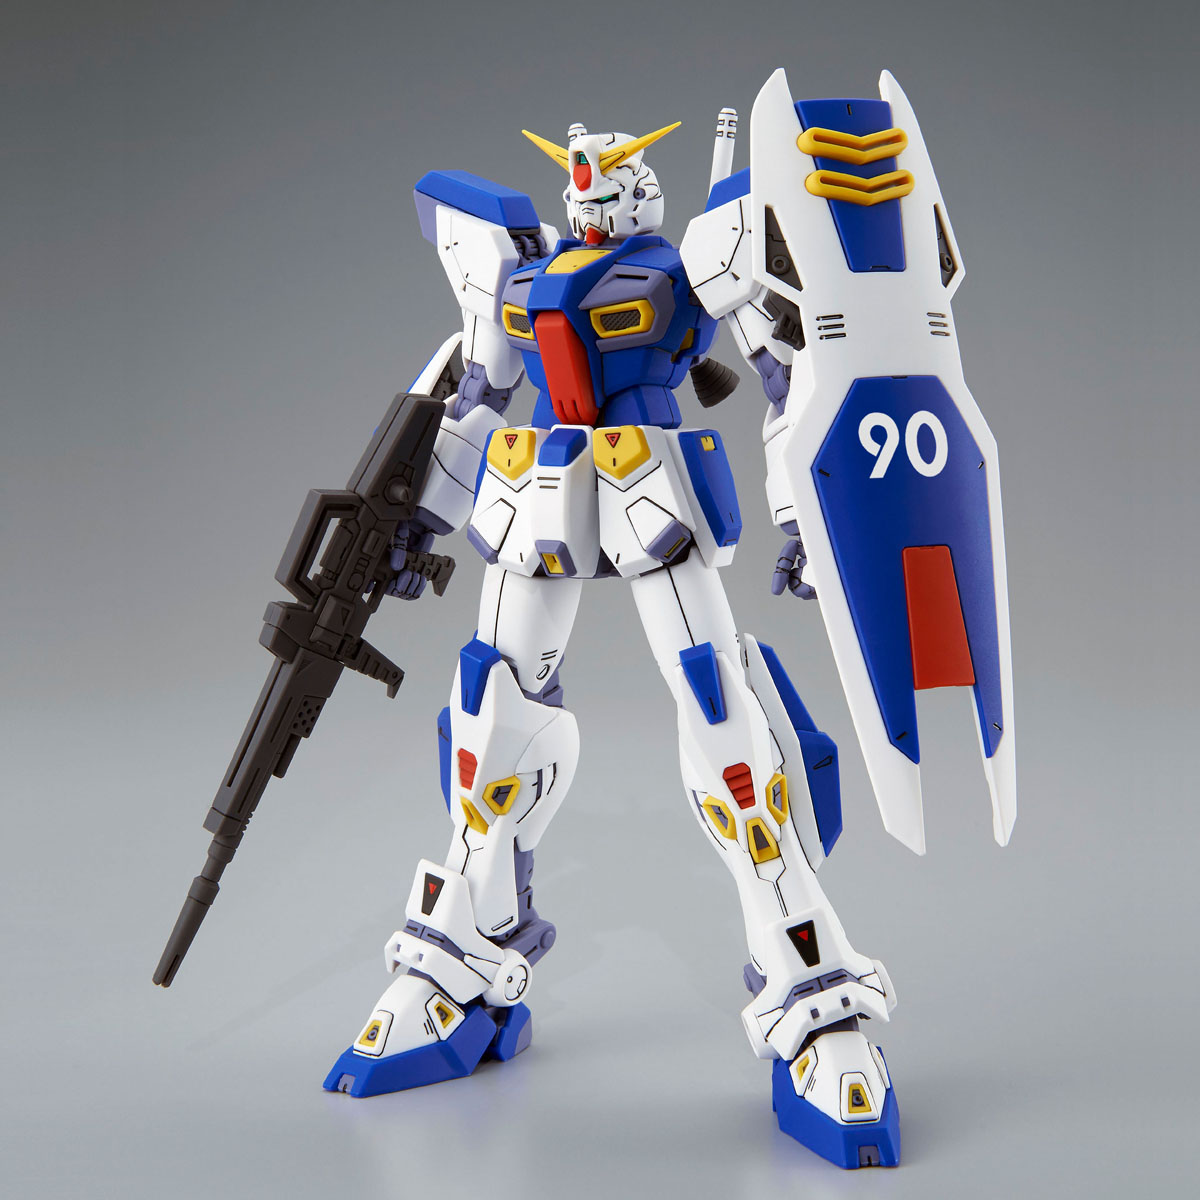 Premium Bandai MG 1/100 F90 Gundam F90 Mobile Suit Kit Modello Dal Giappone 